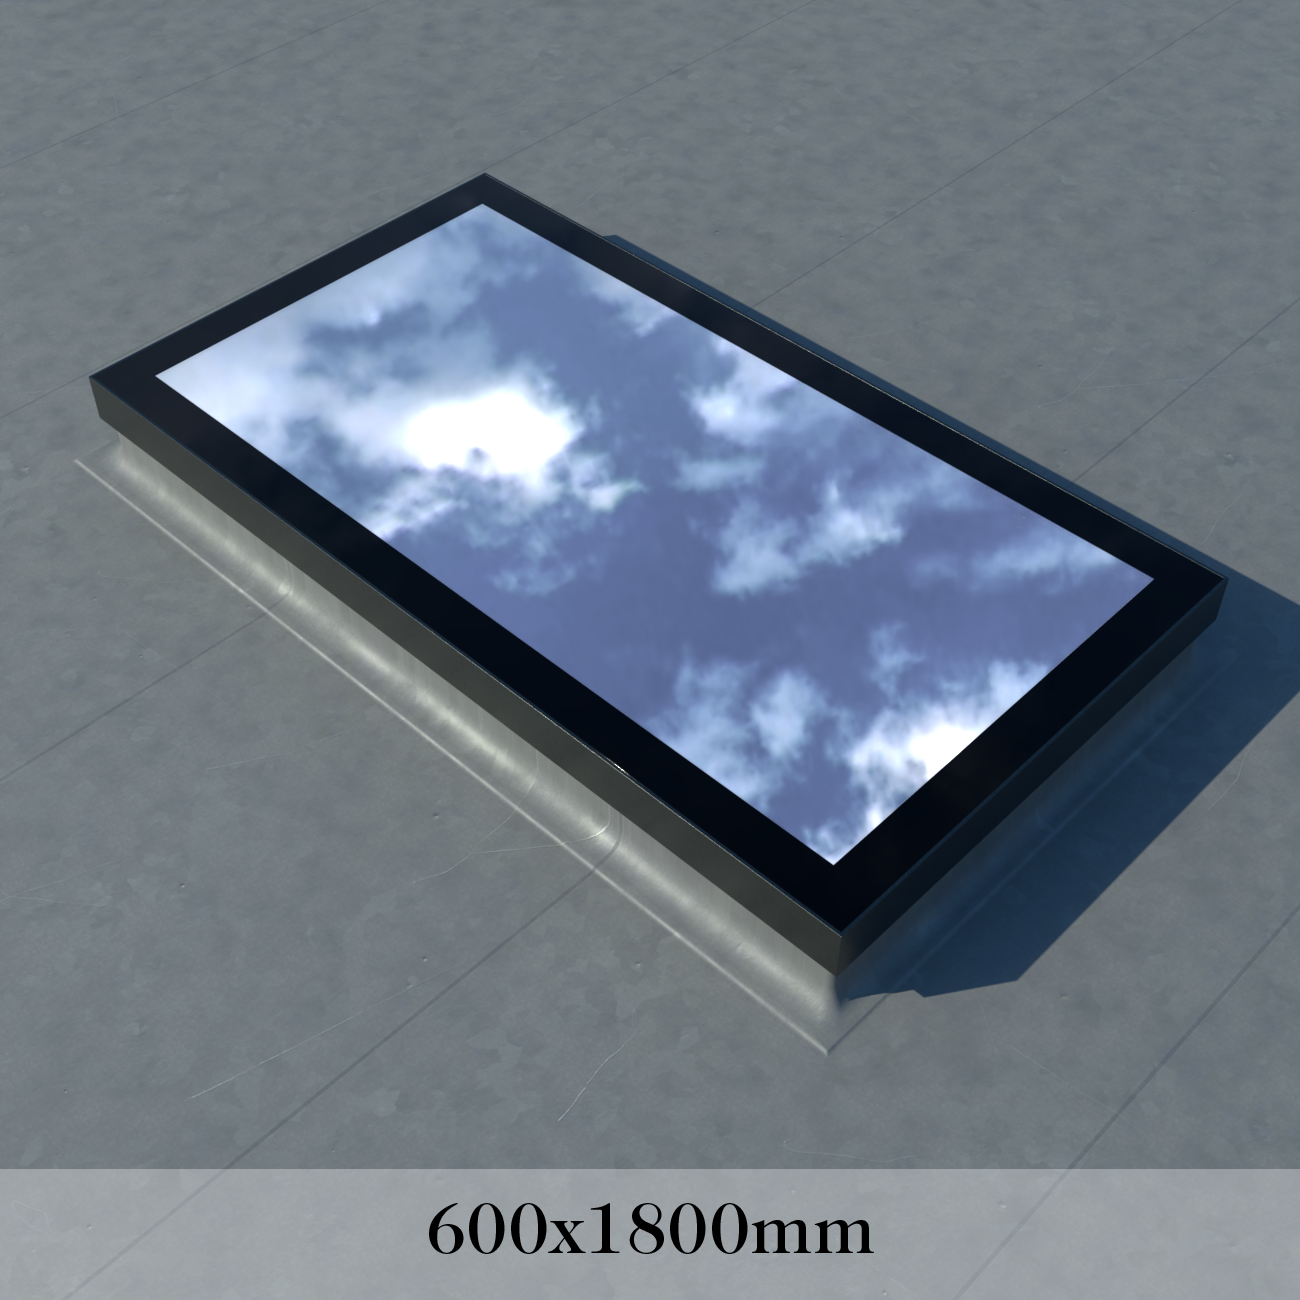 Framed Skylight 600 x 1800 mm – Double glazed